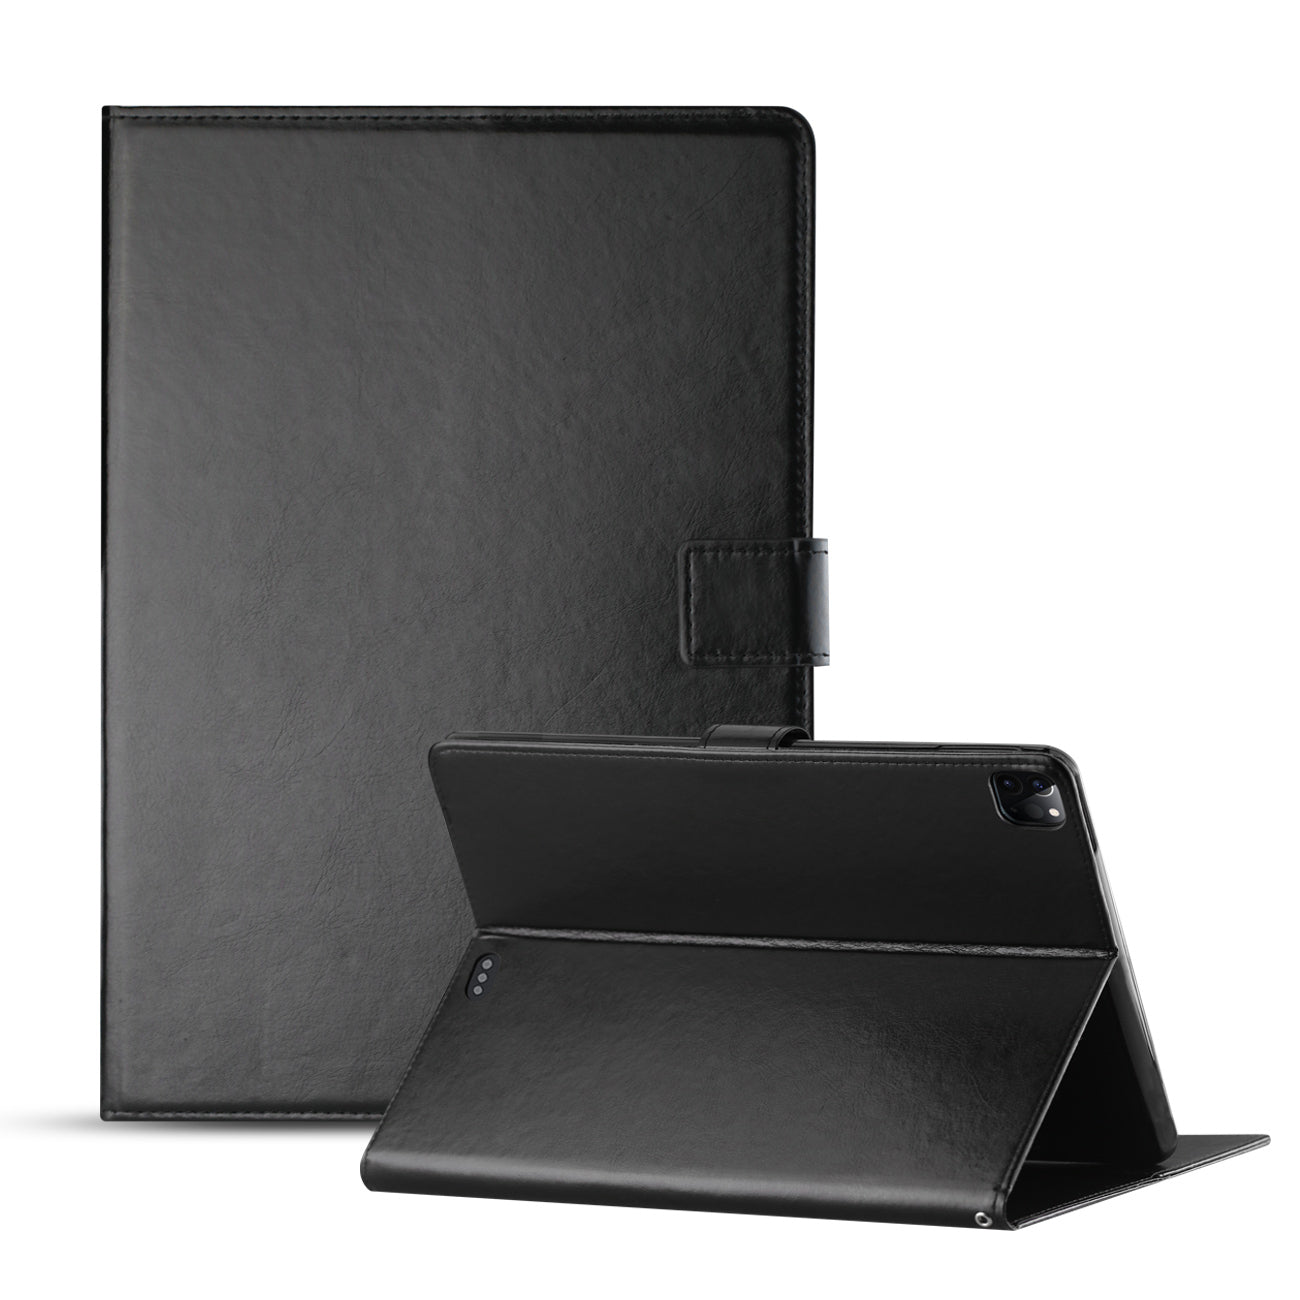 Reiko Leather Folio Cover Protective Case for 12.9" iPad Pro In Black